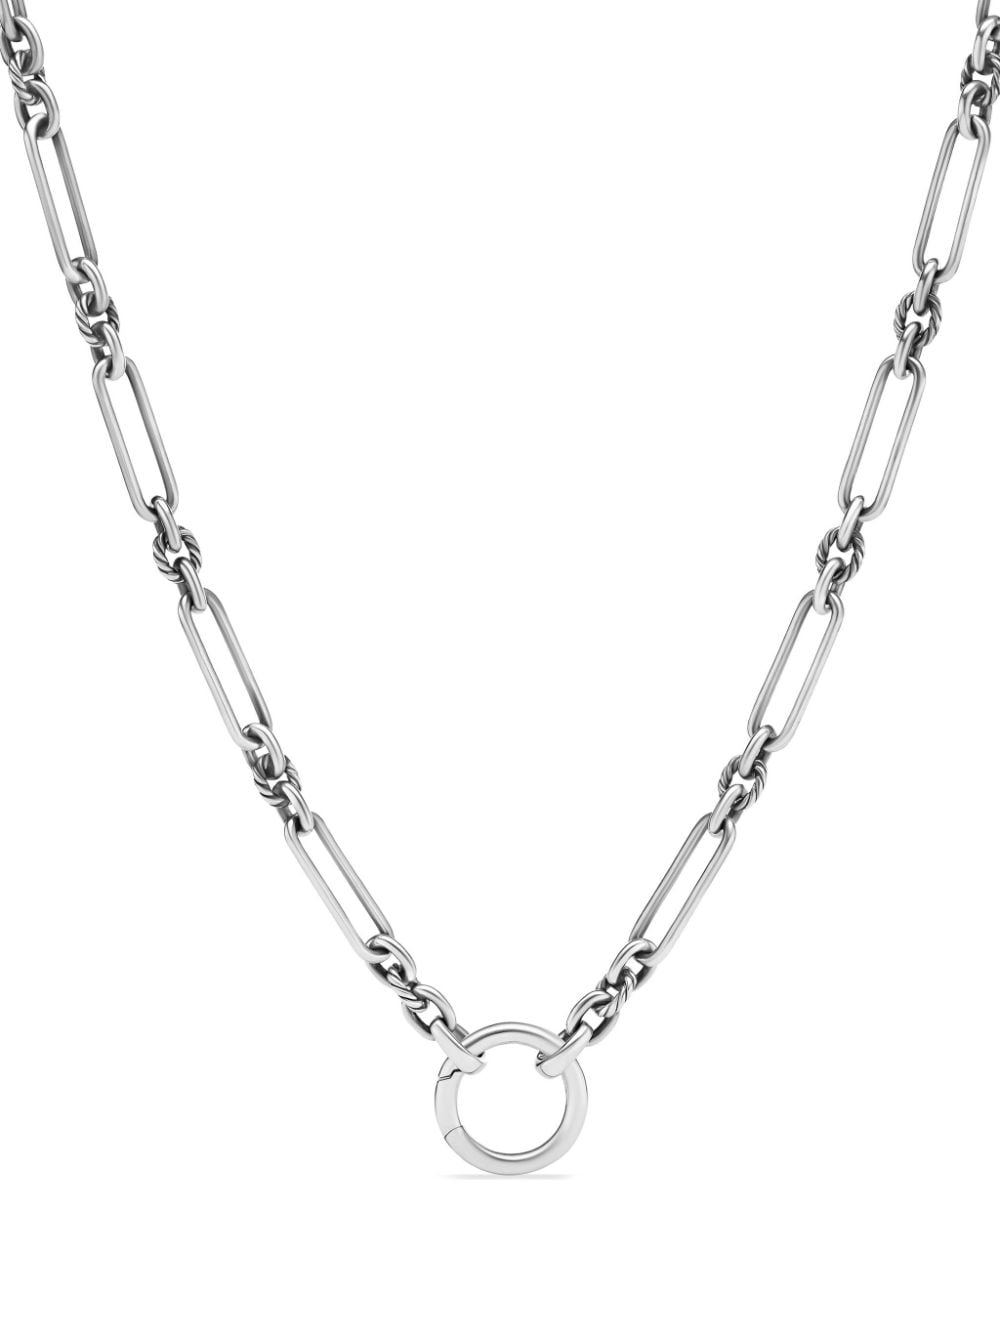 Image 1 of David Yurman sterling silver Lexington chain necklace